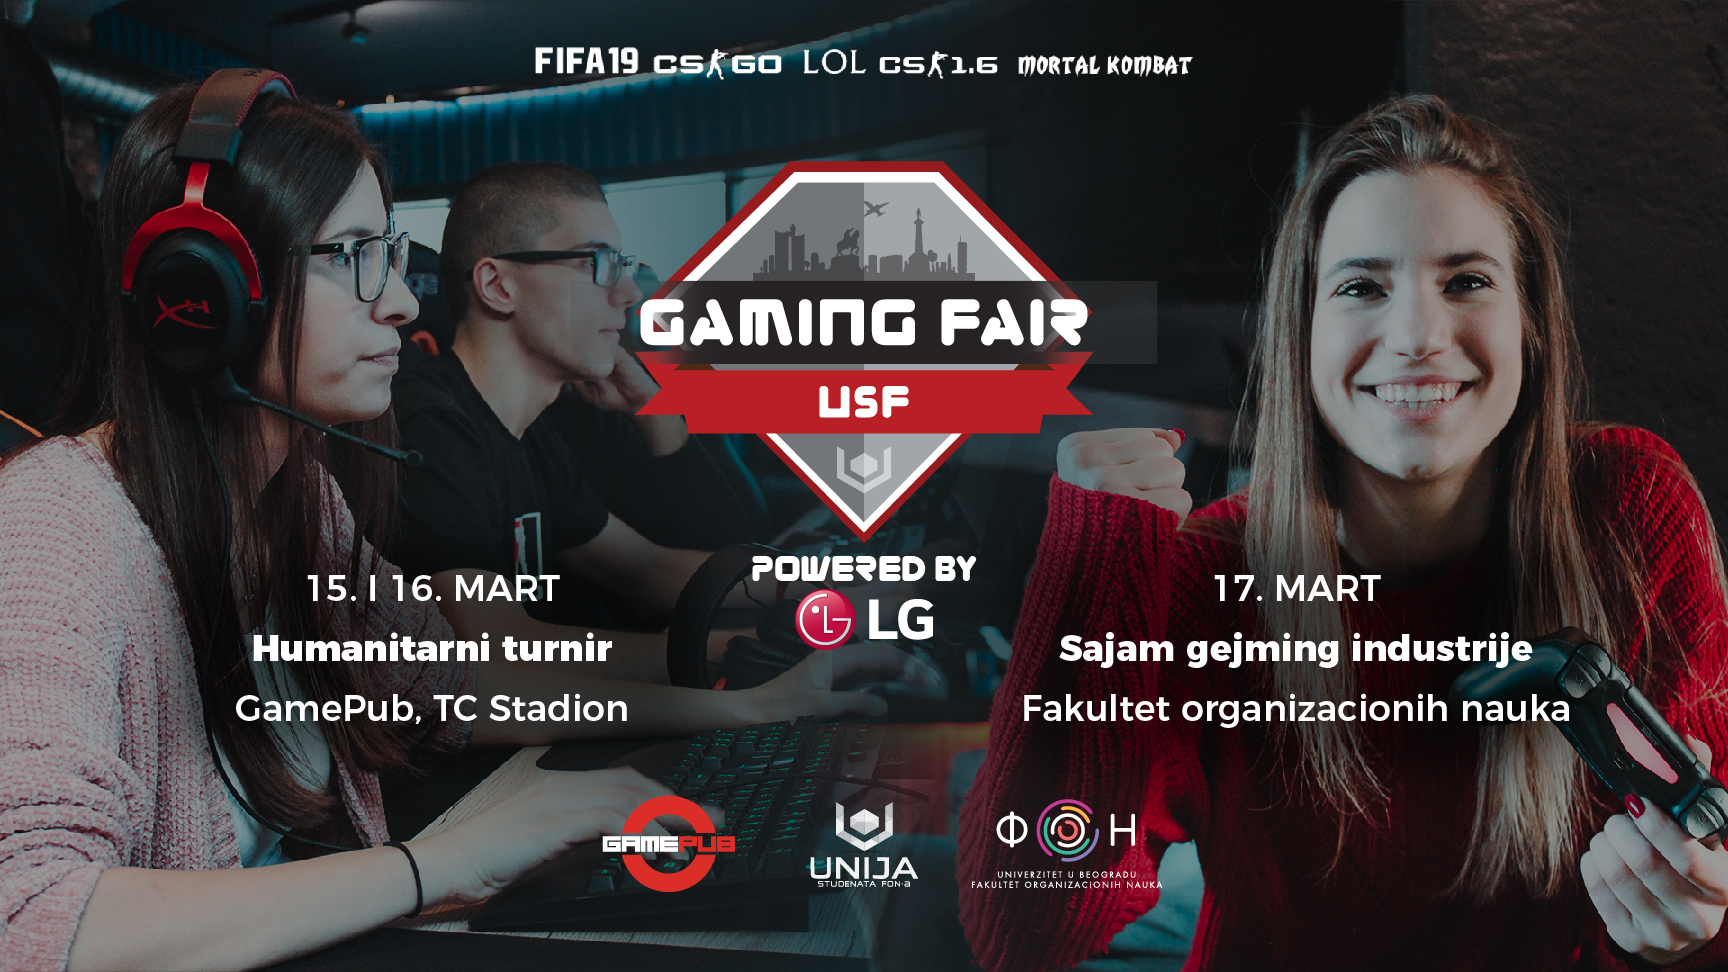 USF Gaming Fair powered by LG Portal Mladi